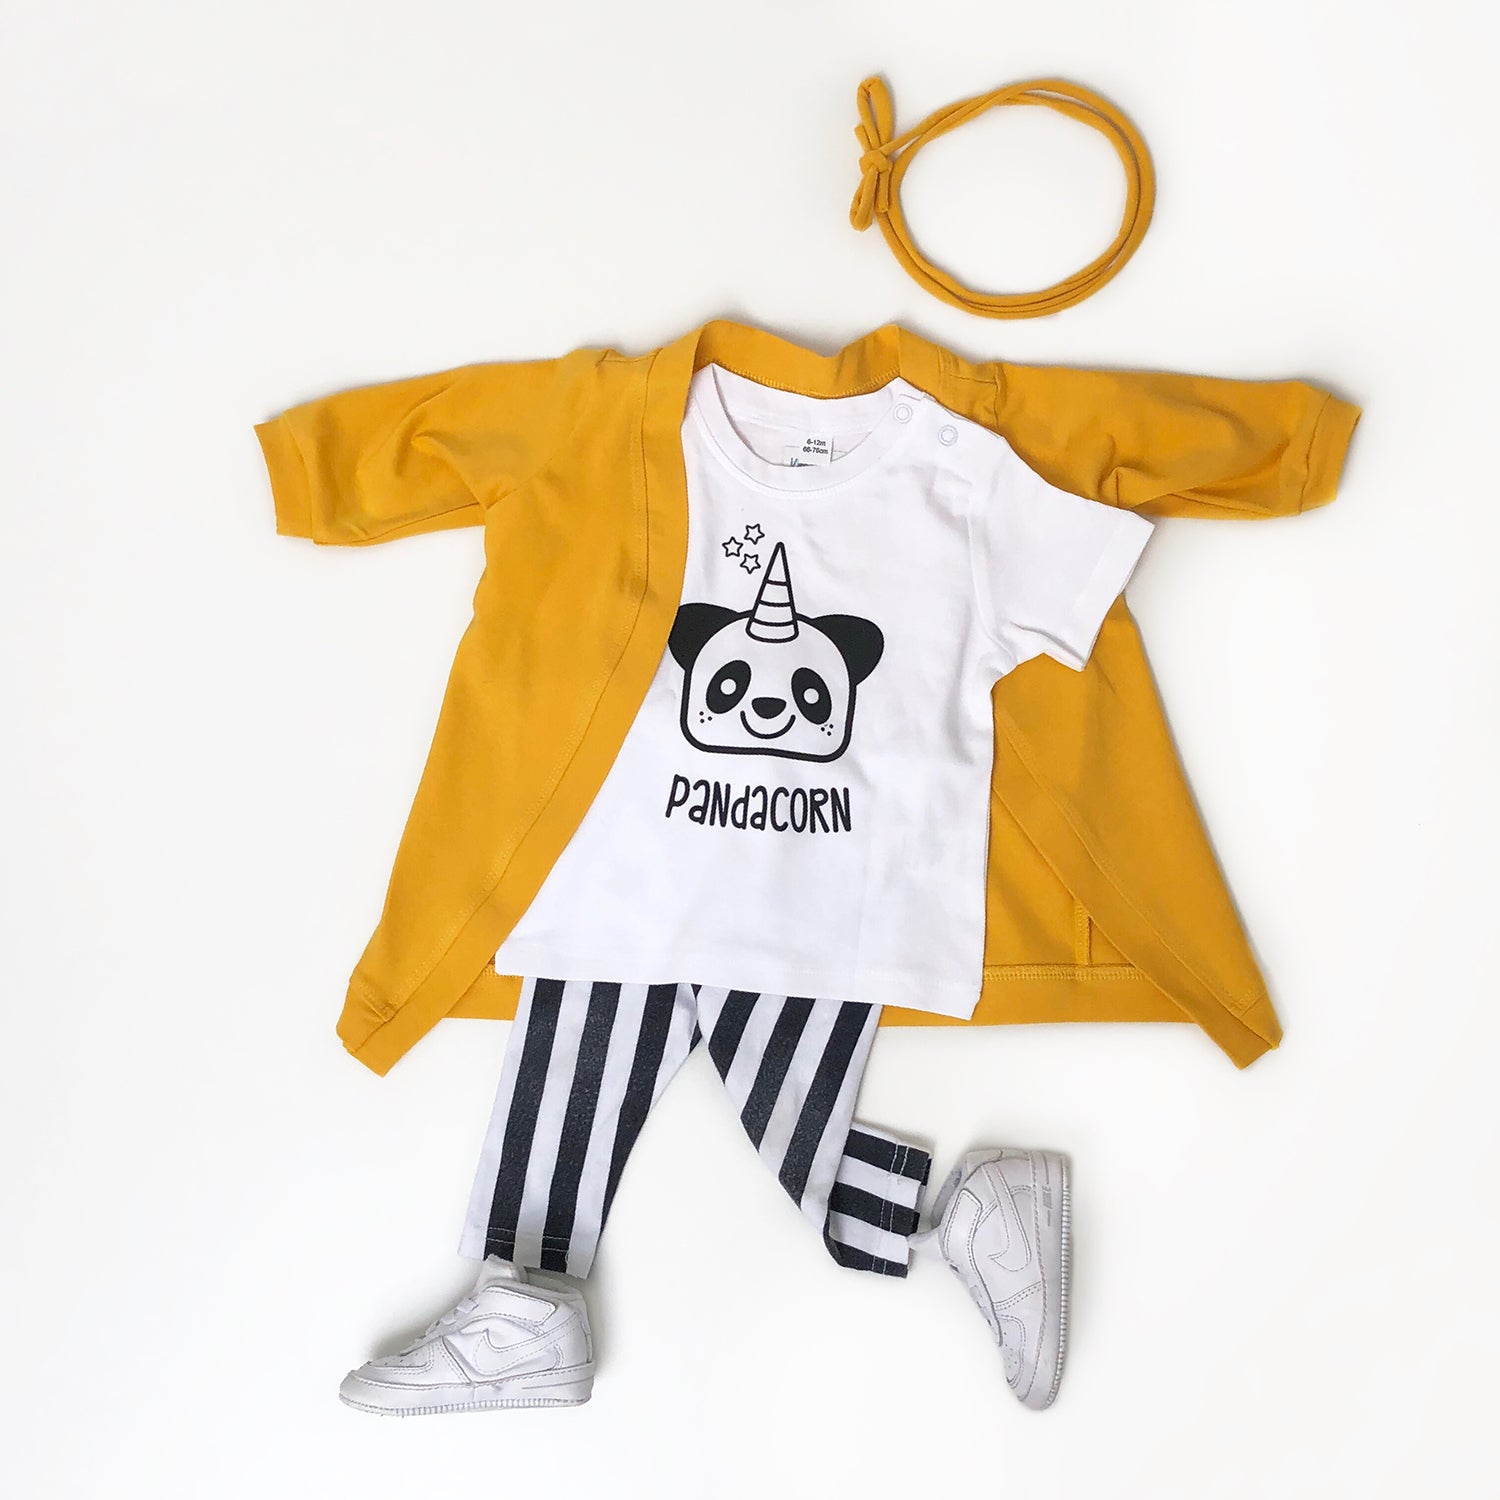 Pandacorn baby shirt met korte mouwen